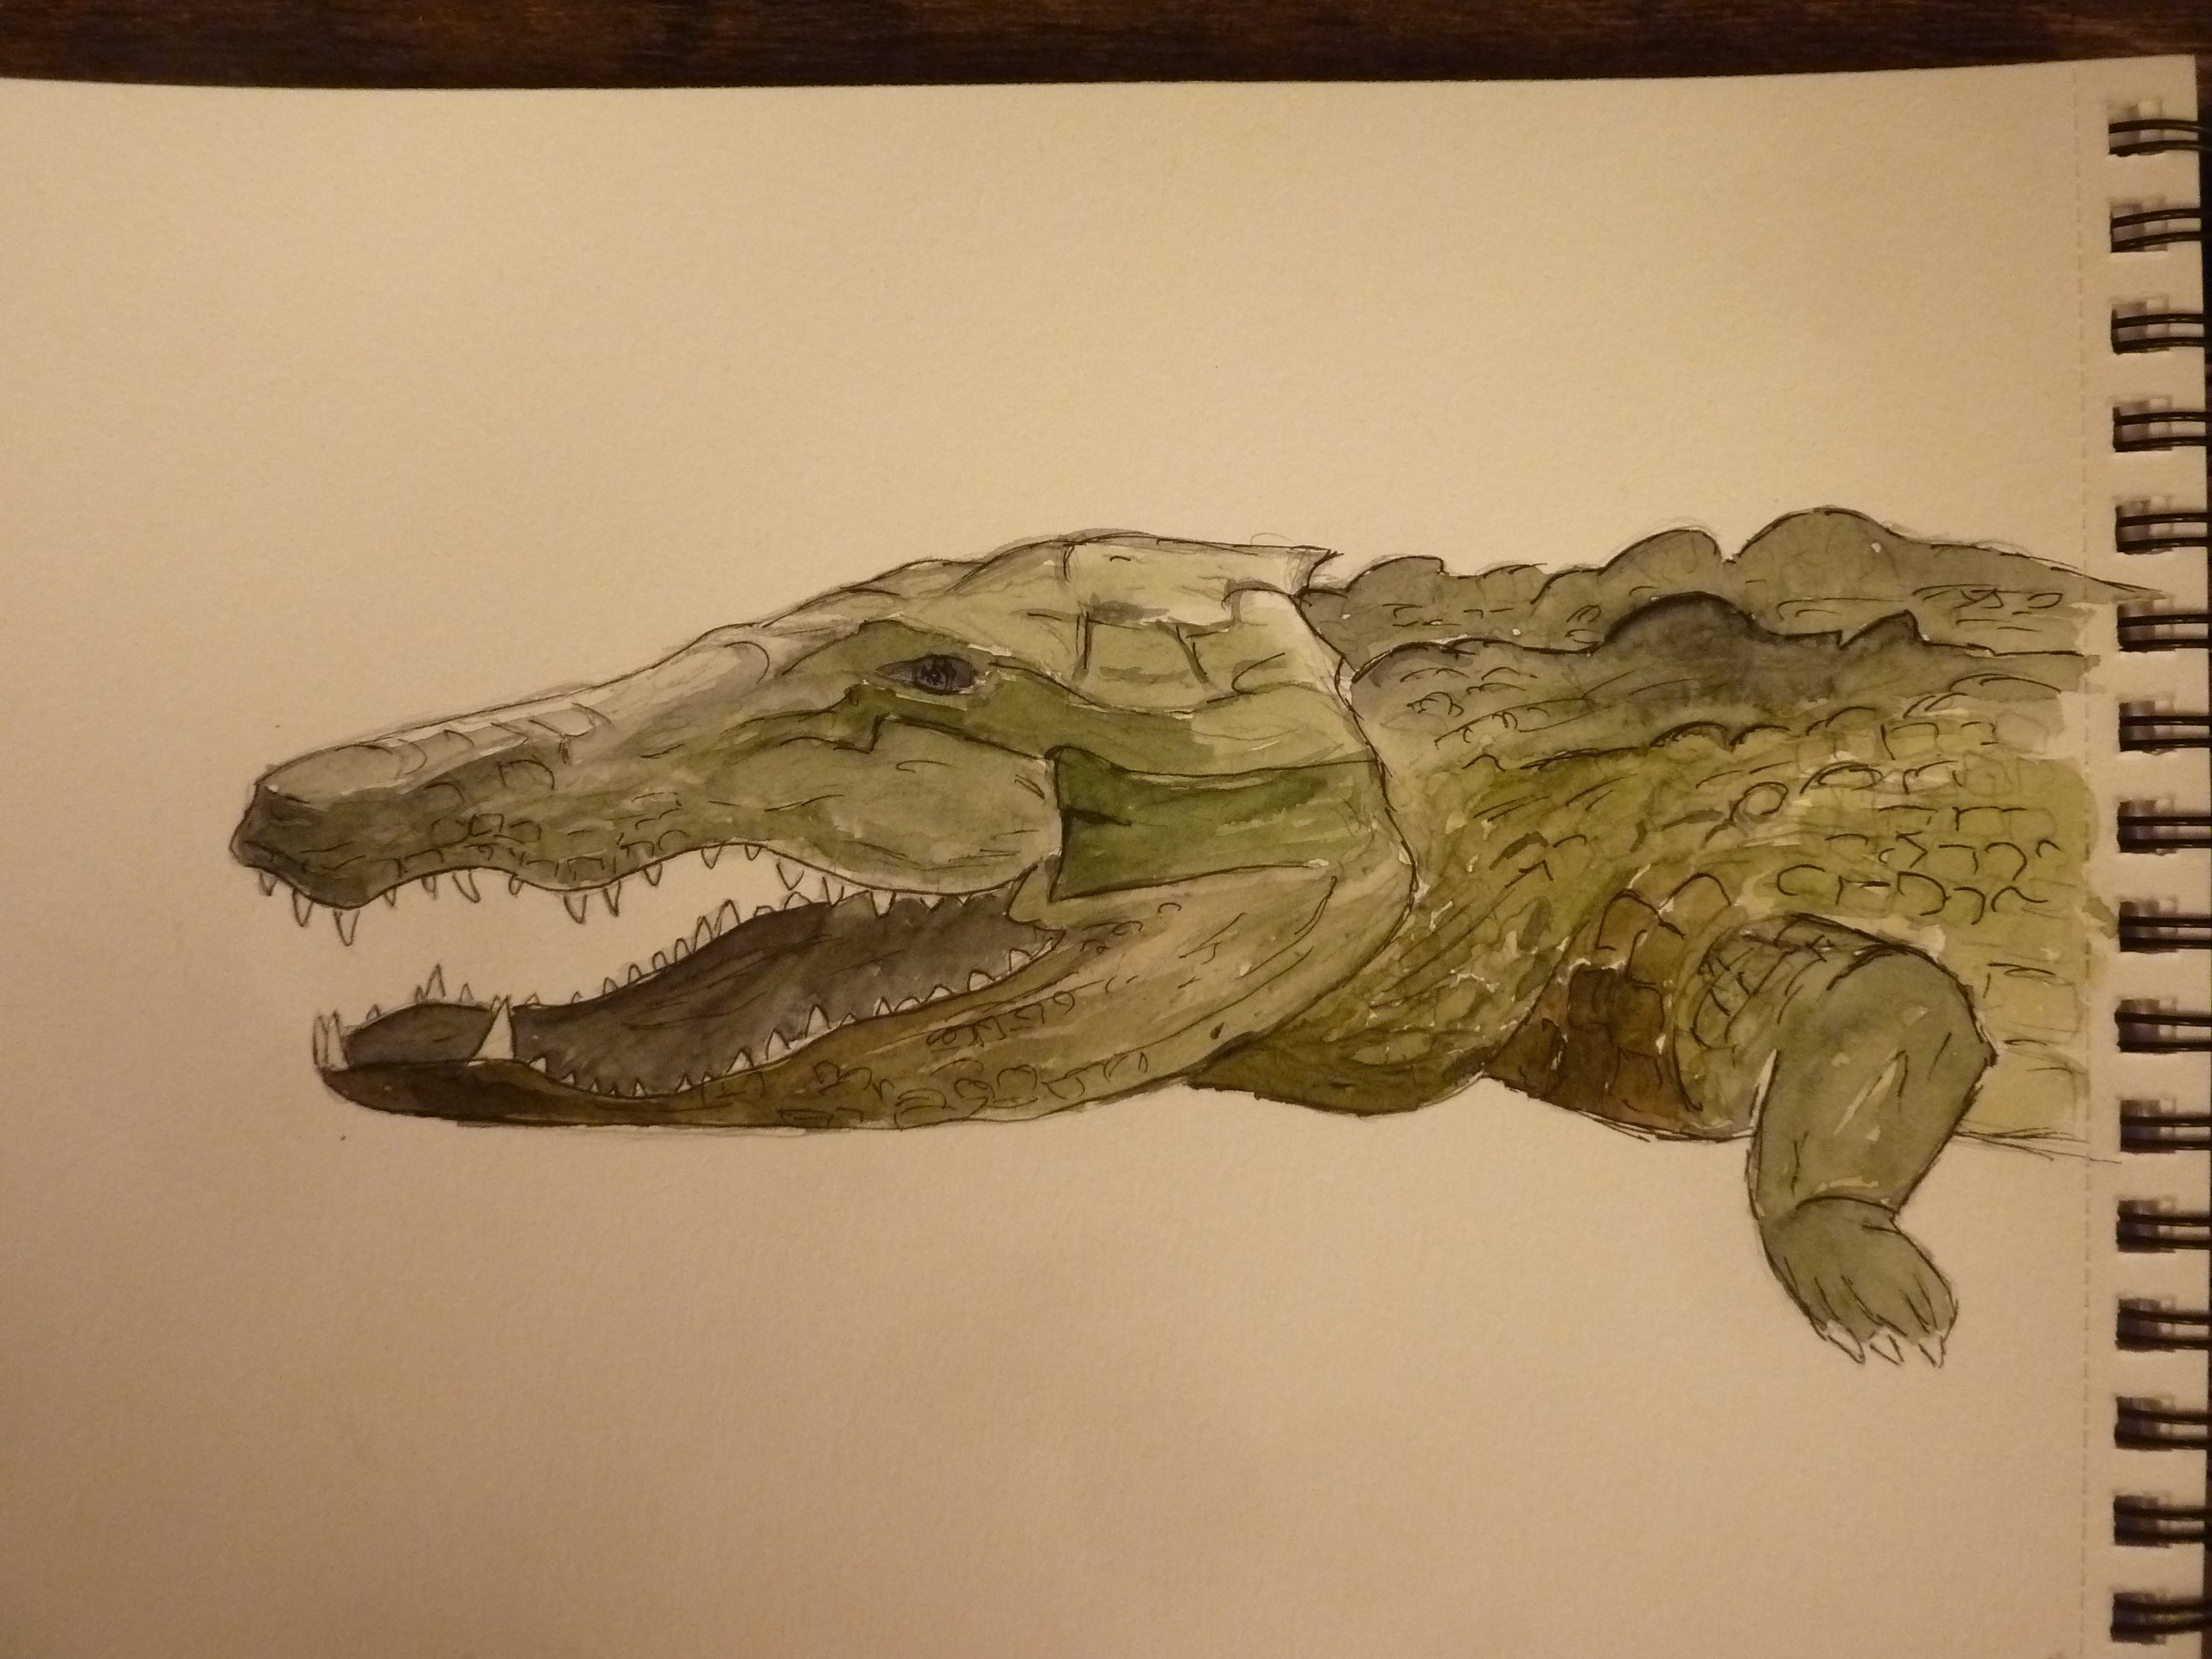 Crocodile par ganondorf